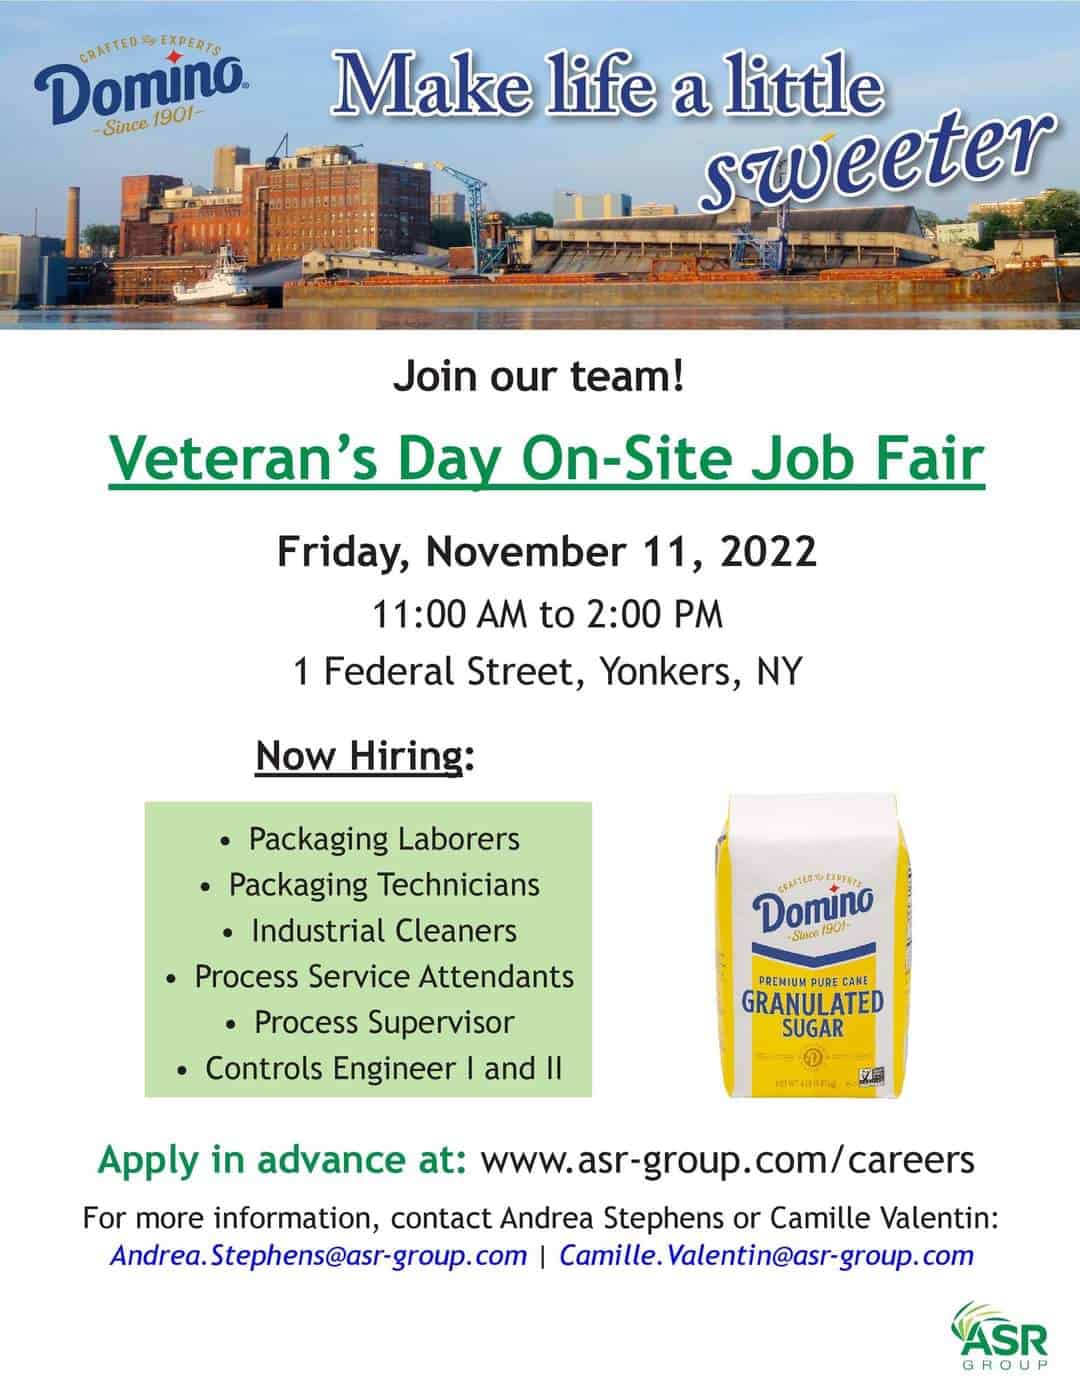 Domino's Sugar Yonkers to Host Veterans Day Job Fair Nov. 11 Yonkers